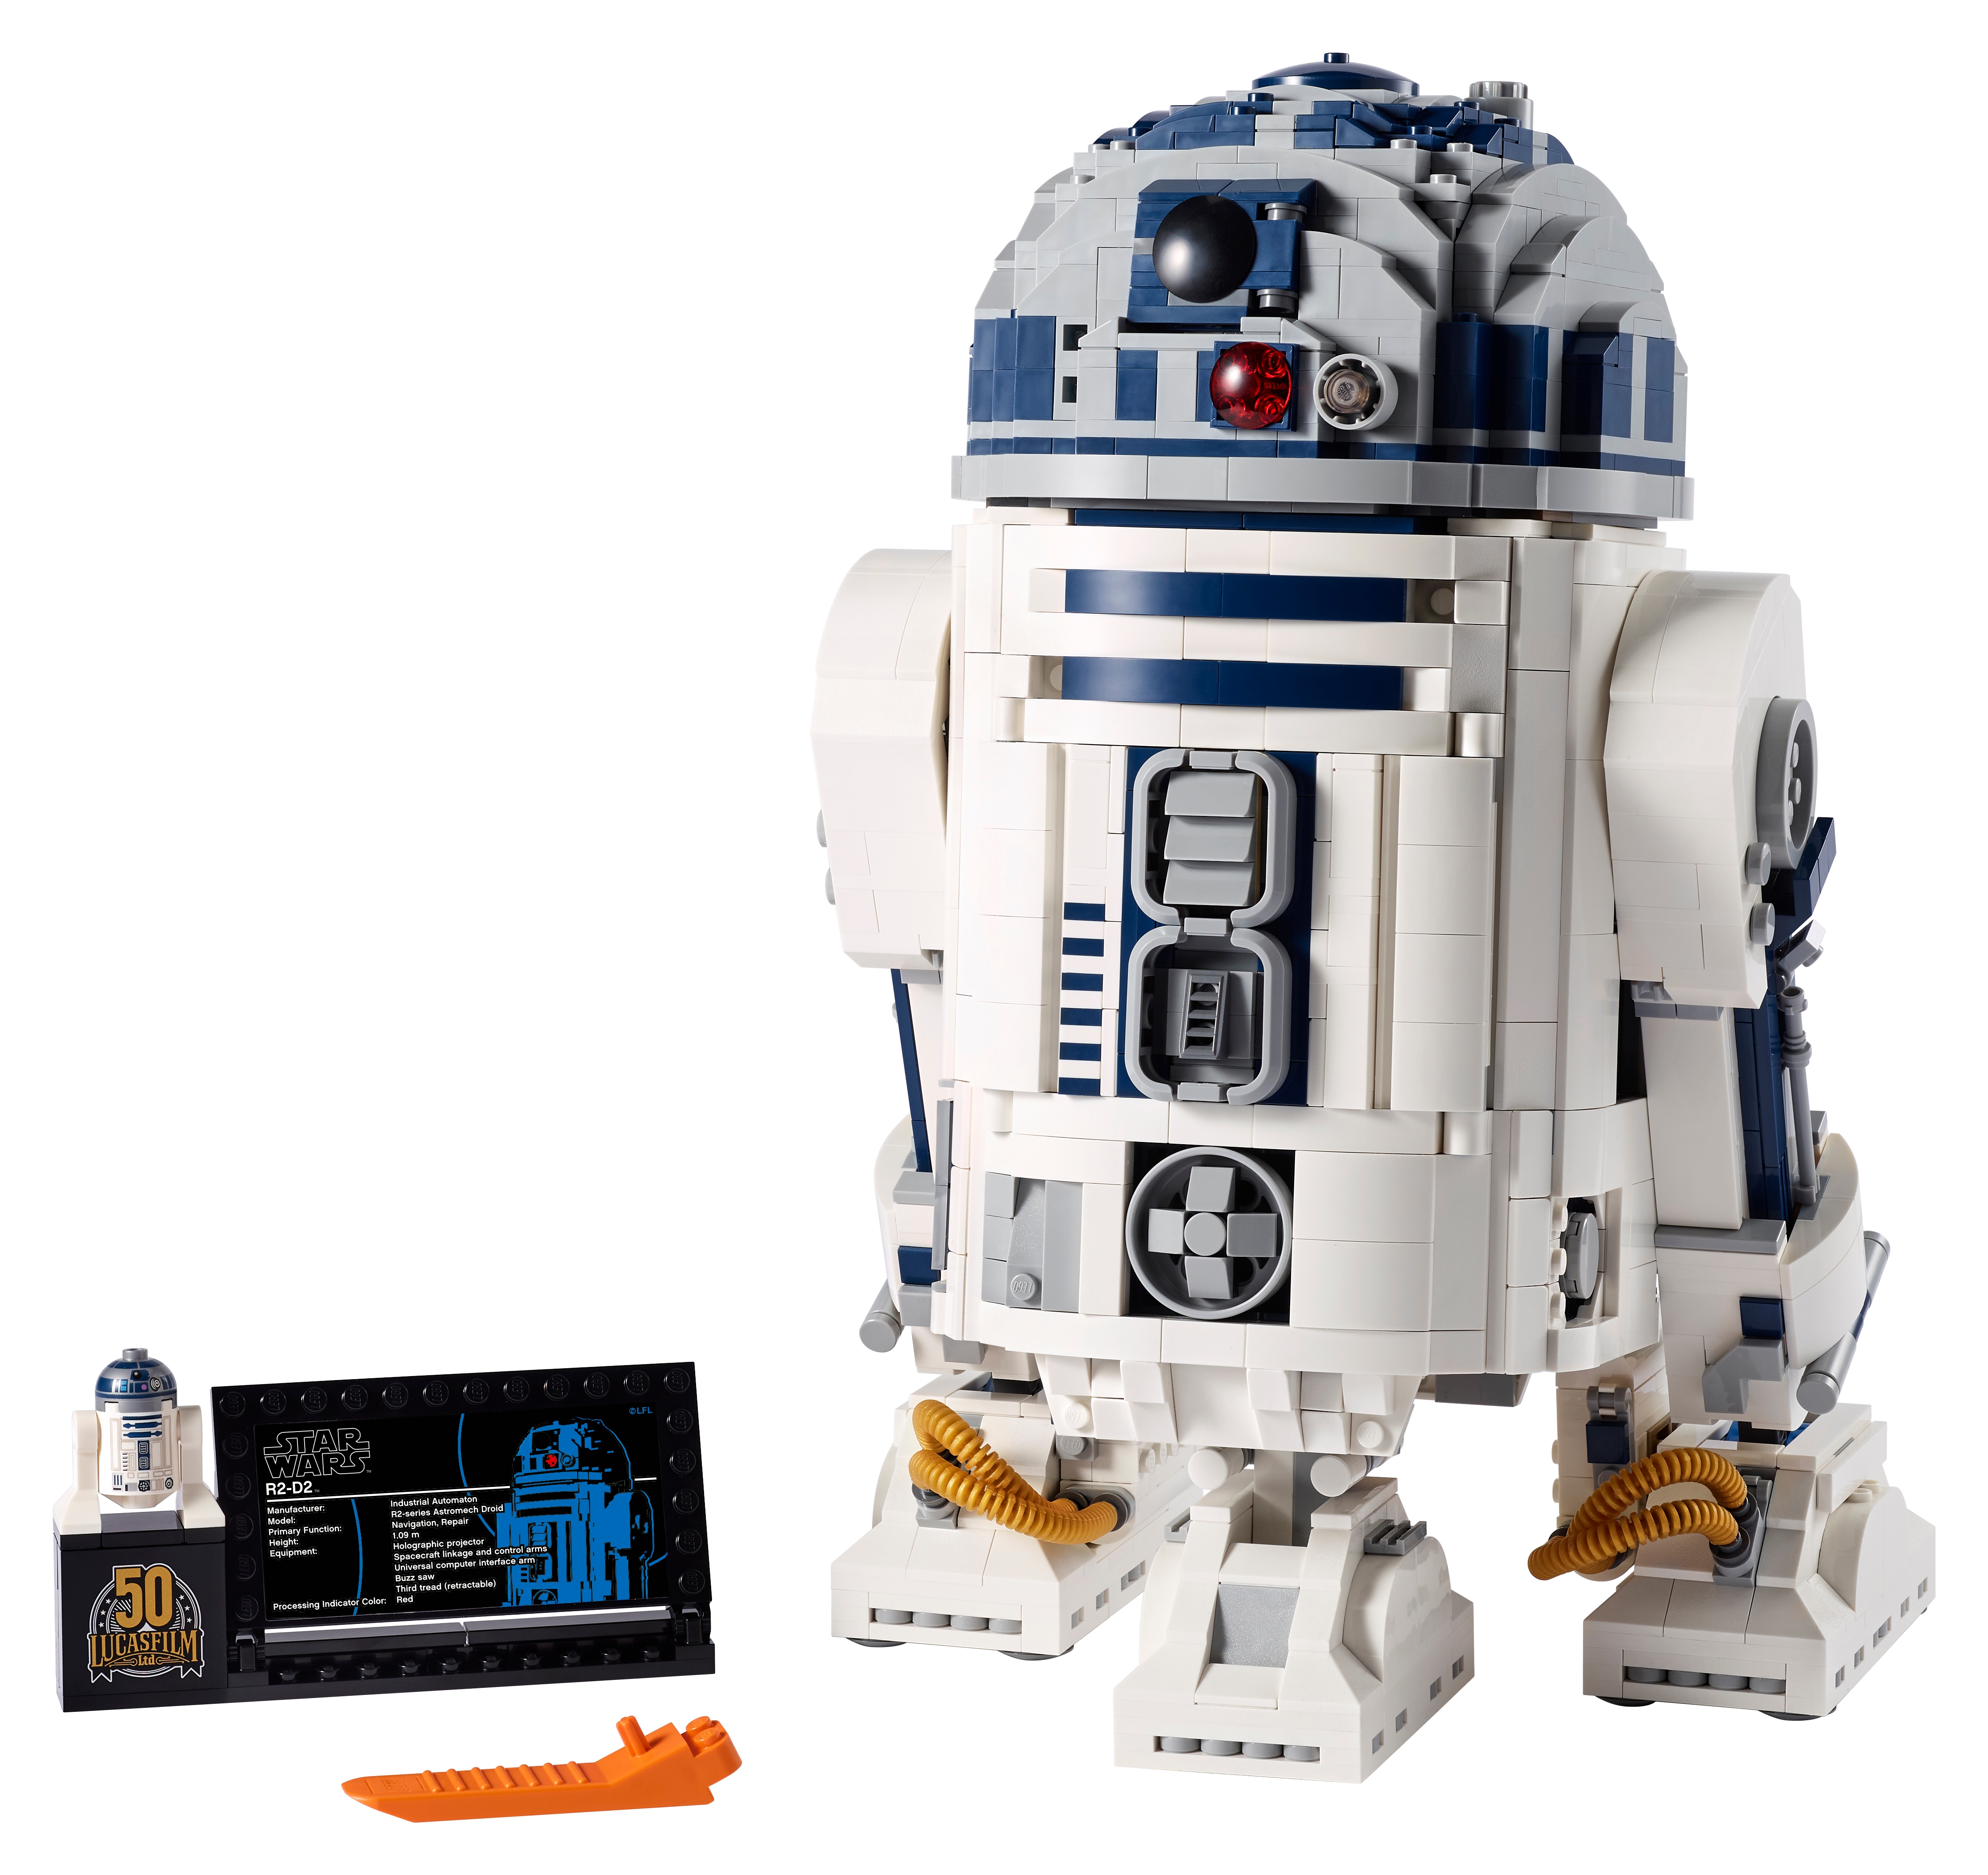 Barry Atticus Bengelen R2-D2™ 75308 | Star Wars™ | Buy online at the Official LEGO® Shop US